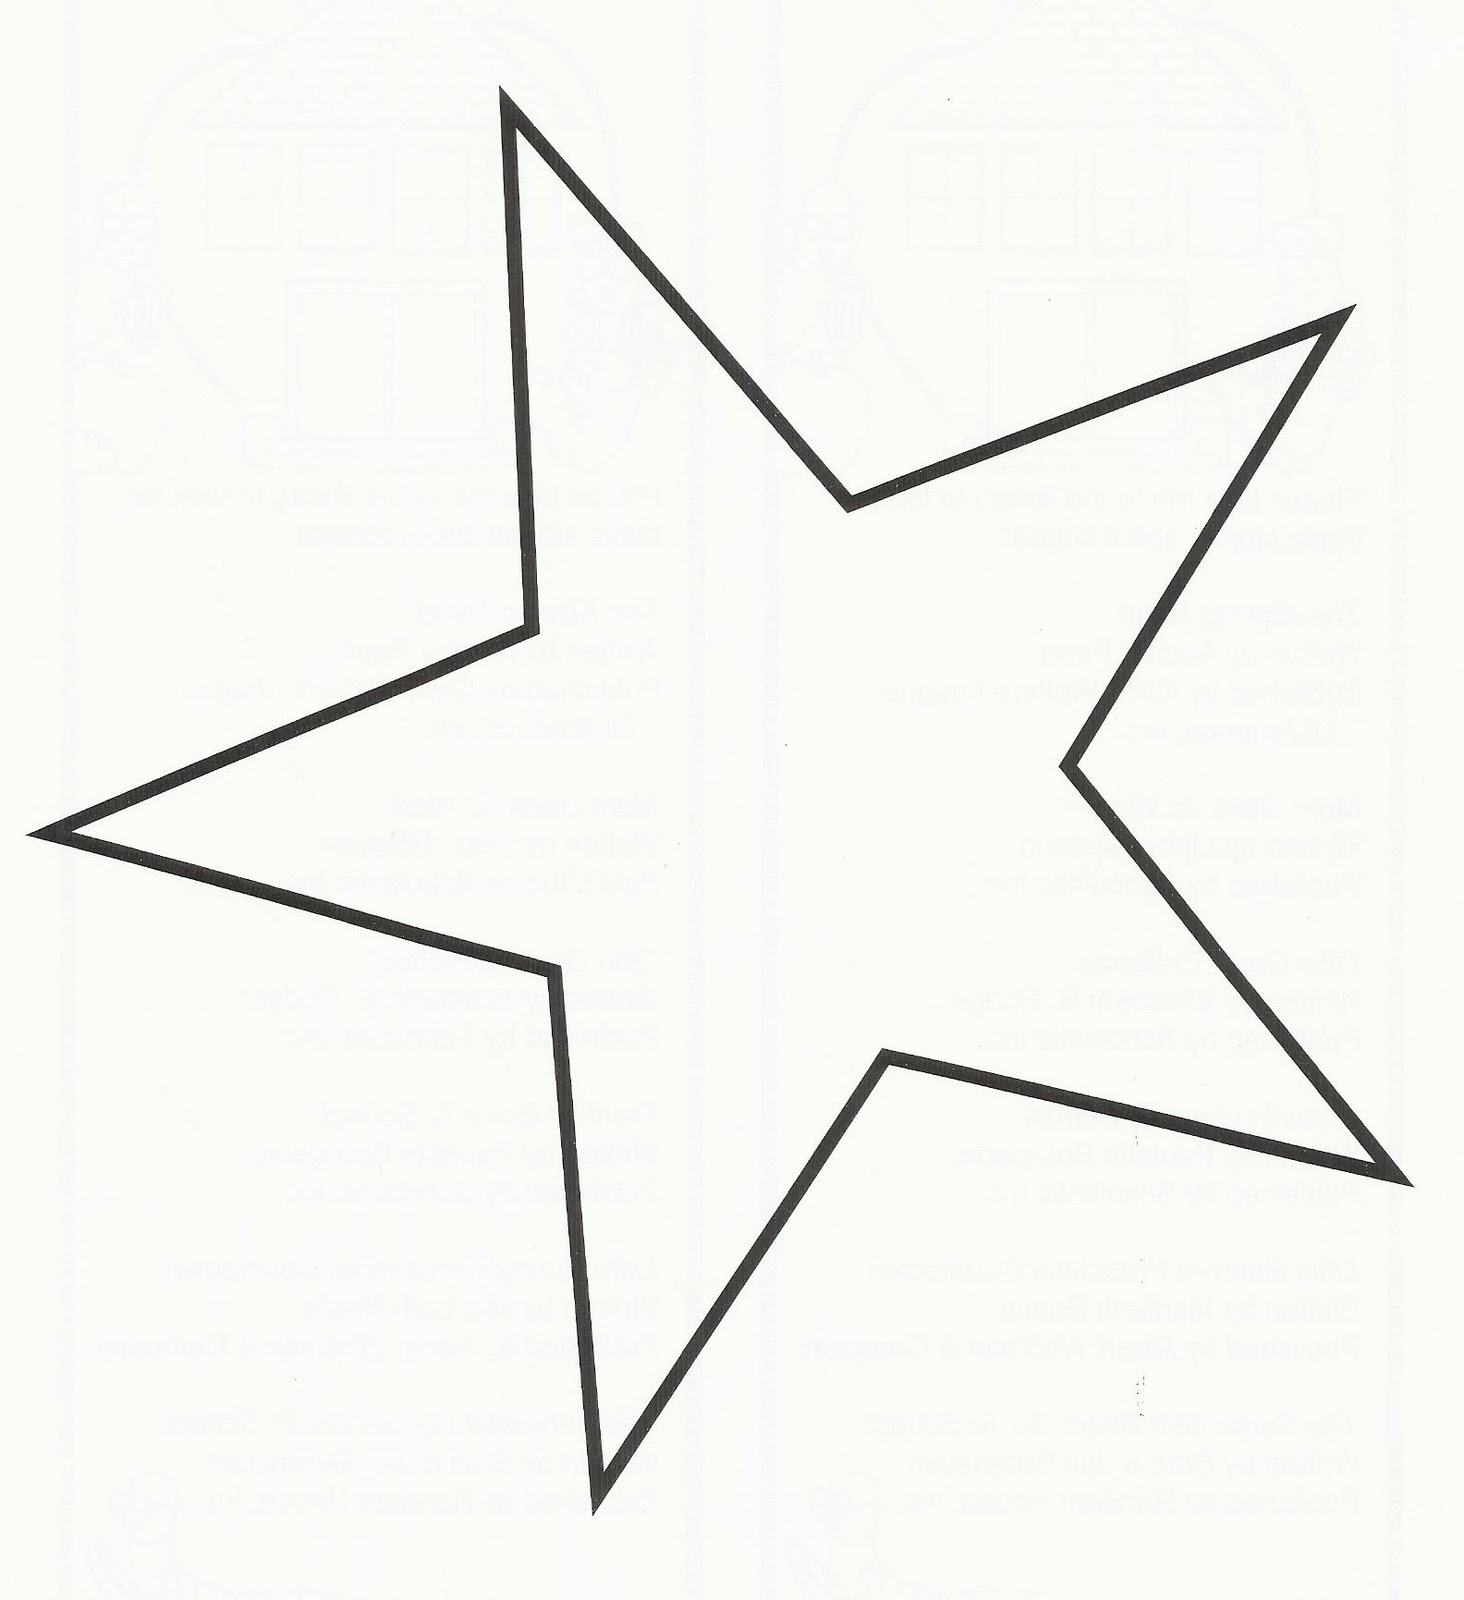 Free Printable Star, Download Free Printable Star png images, Free